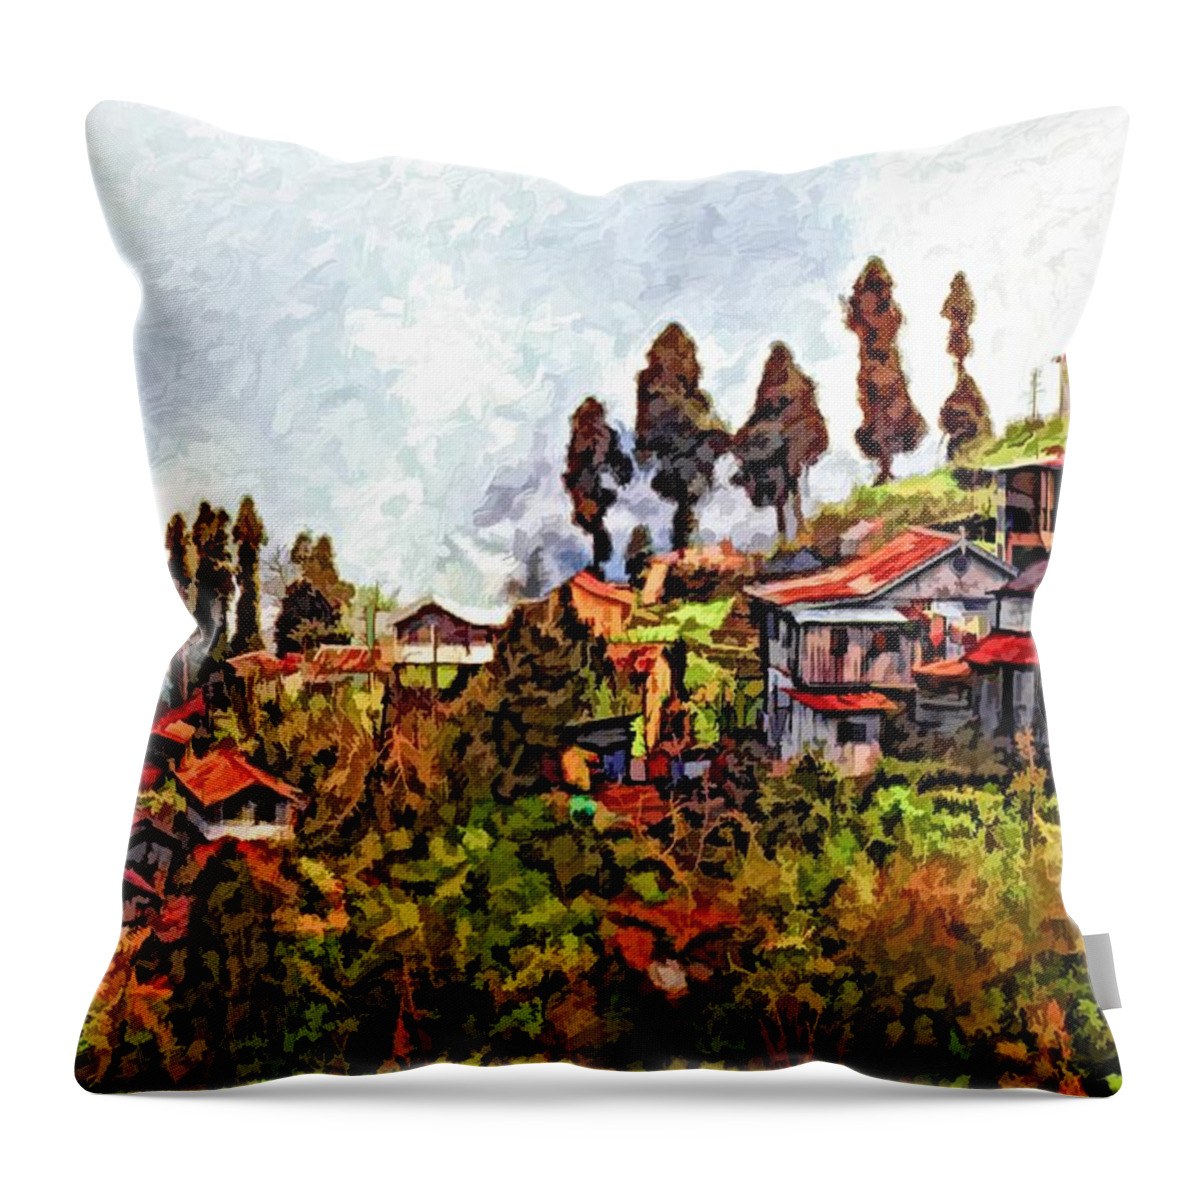 Darjeeling Throw Pillow featuring the photograph Mountain Living by Steve Harrington